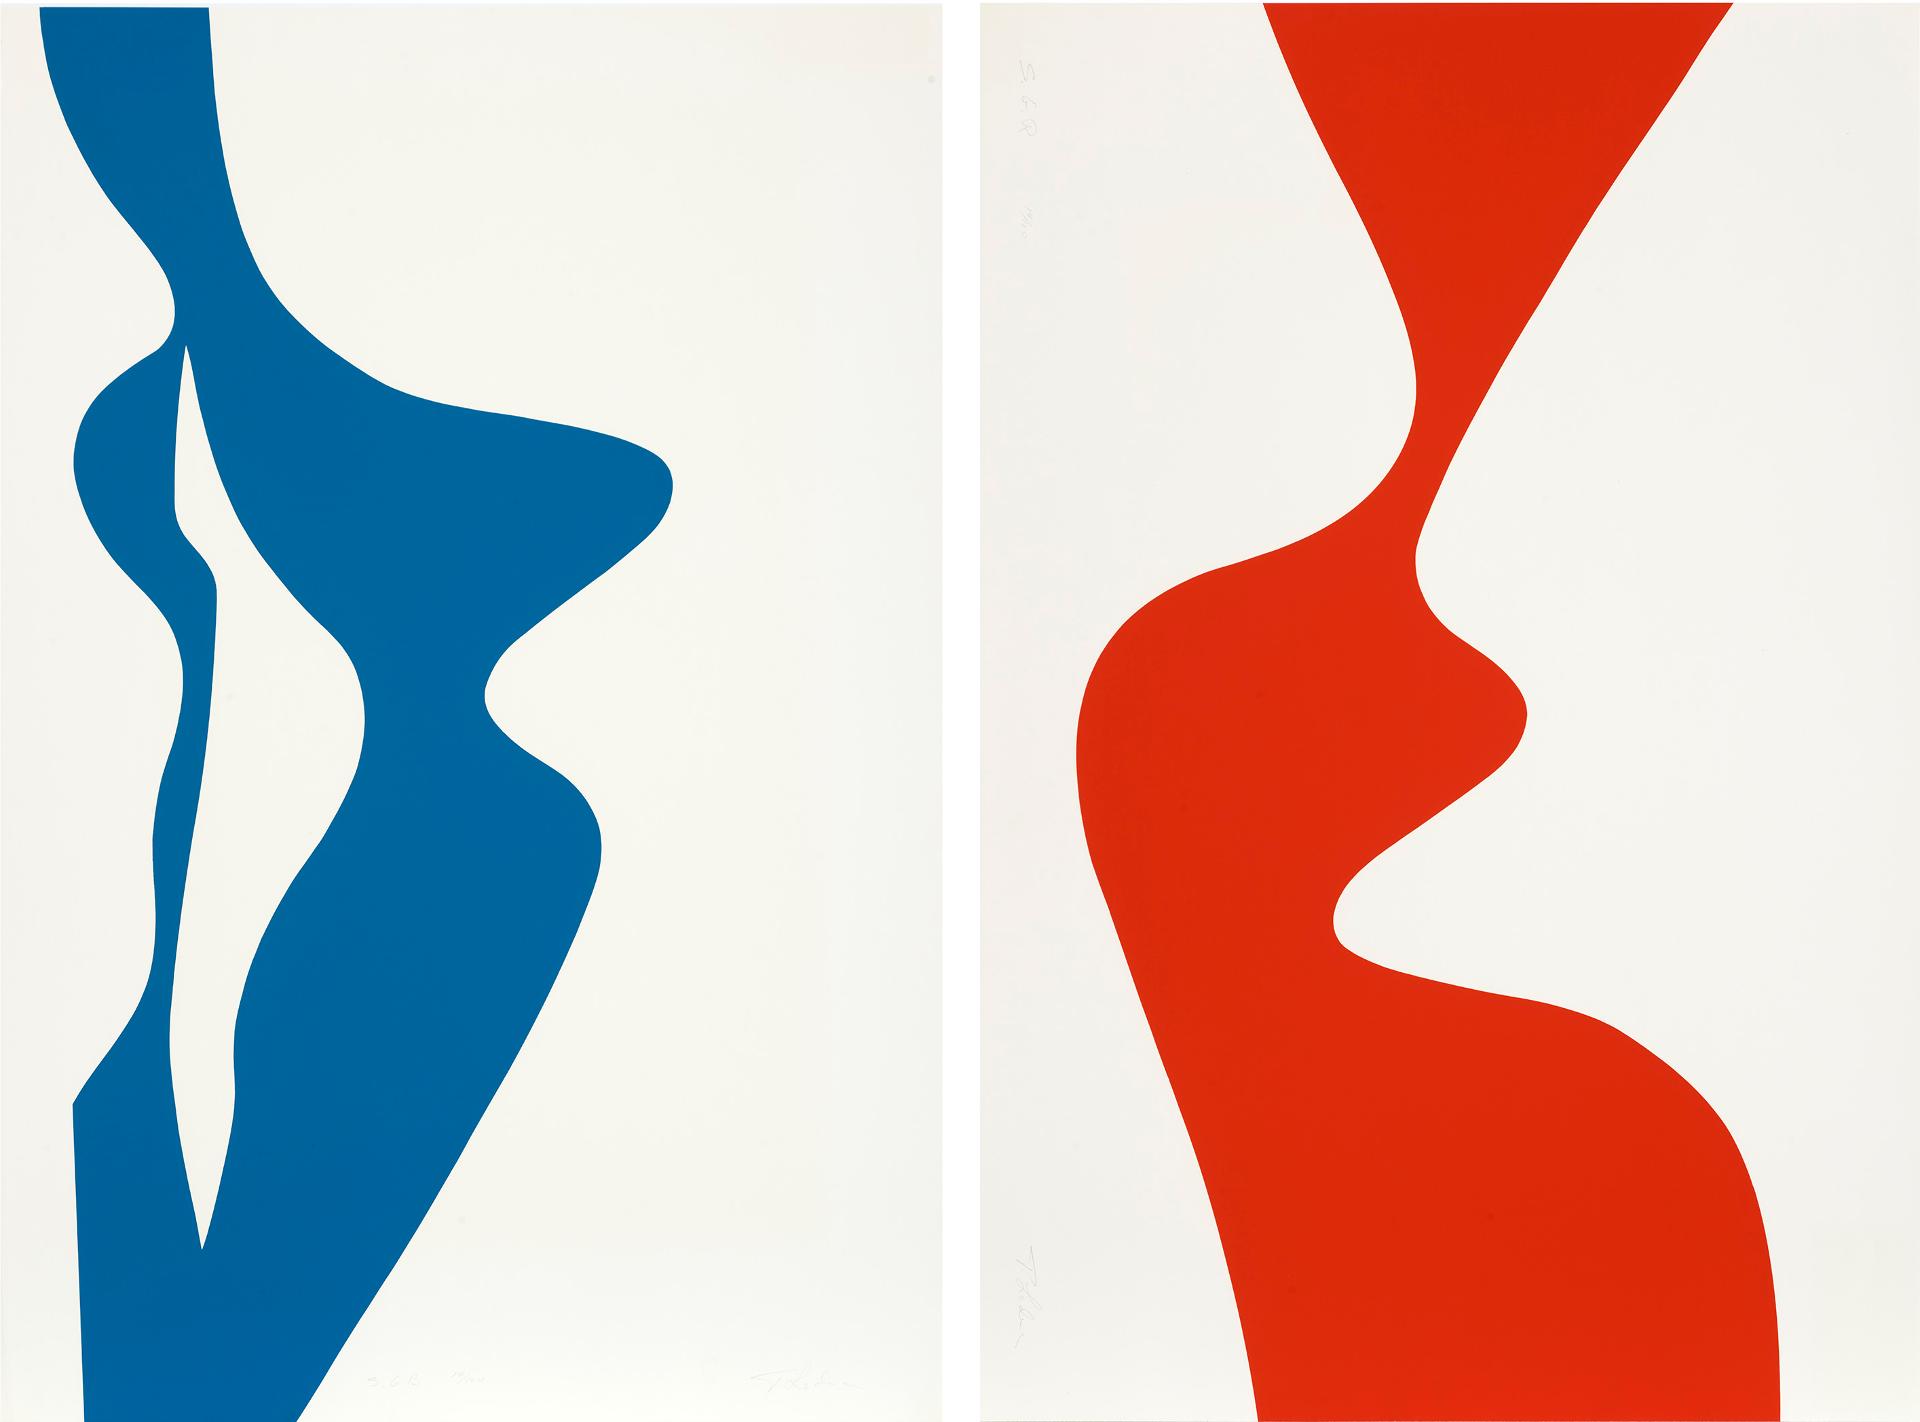 Fernand Leduc (1916-2014) - Fernand Leduc, S.G.B. (Blue), n.d. // S.G.B. (Orange), n.d. (Suite of Two Prints)